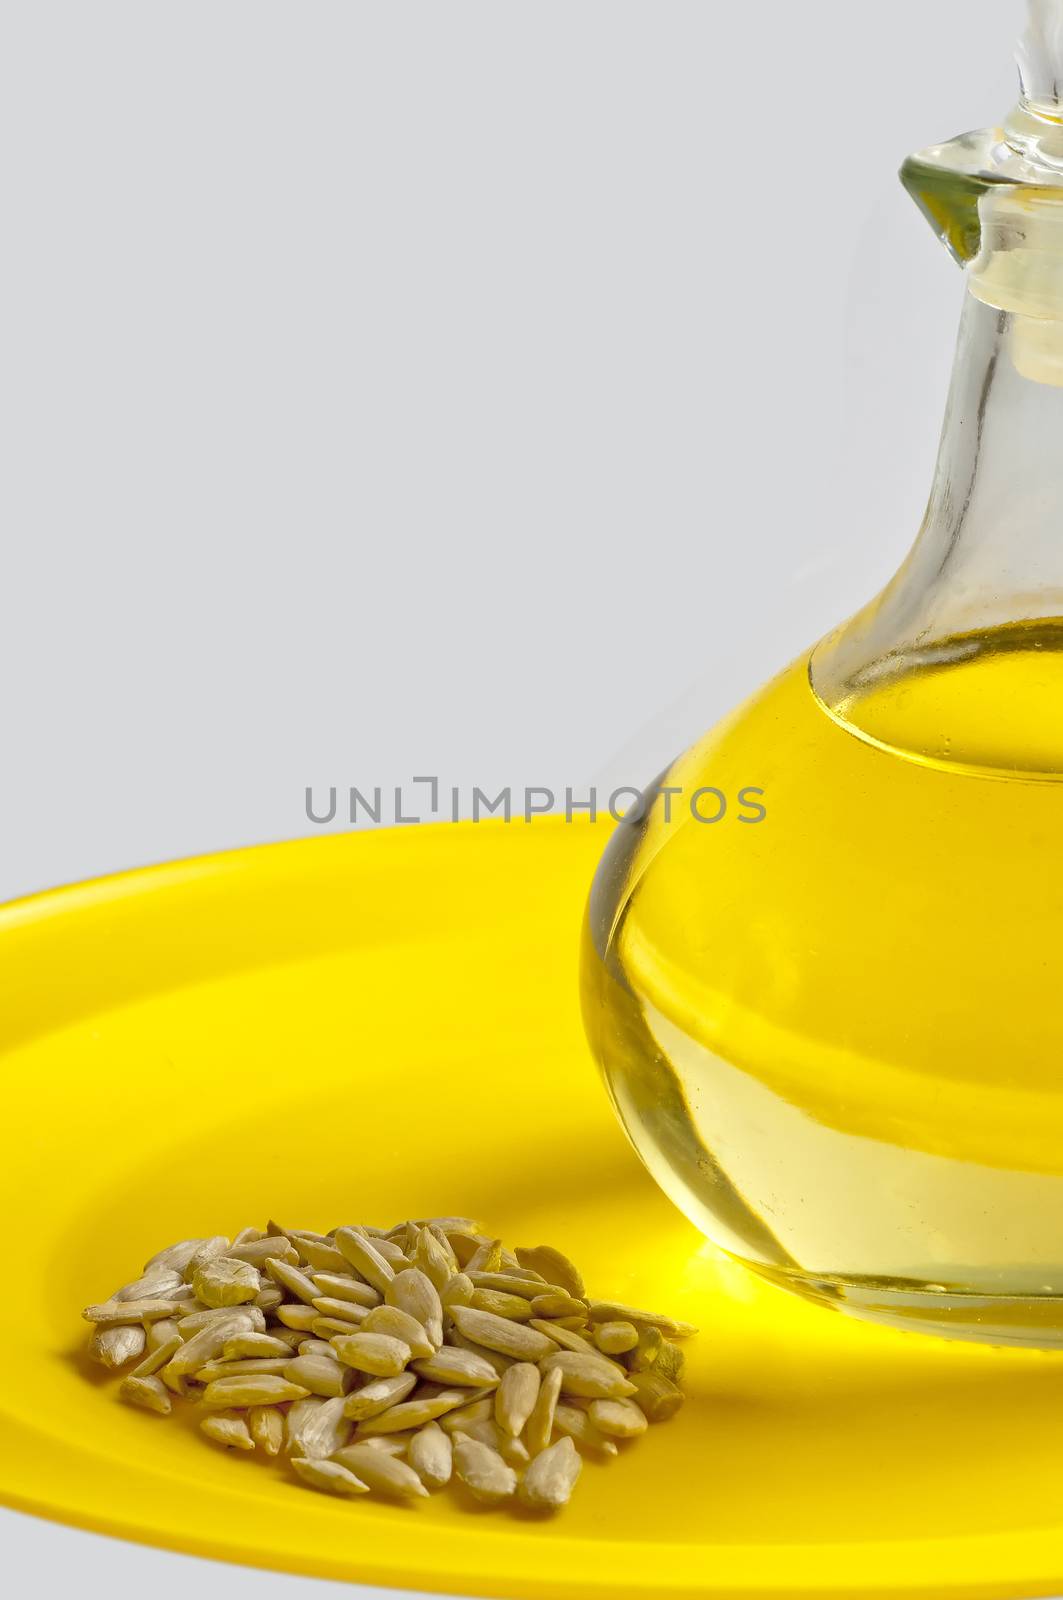 sunflower oil and sunflower seeds by Jochen